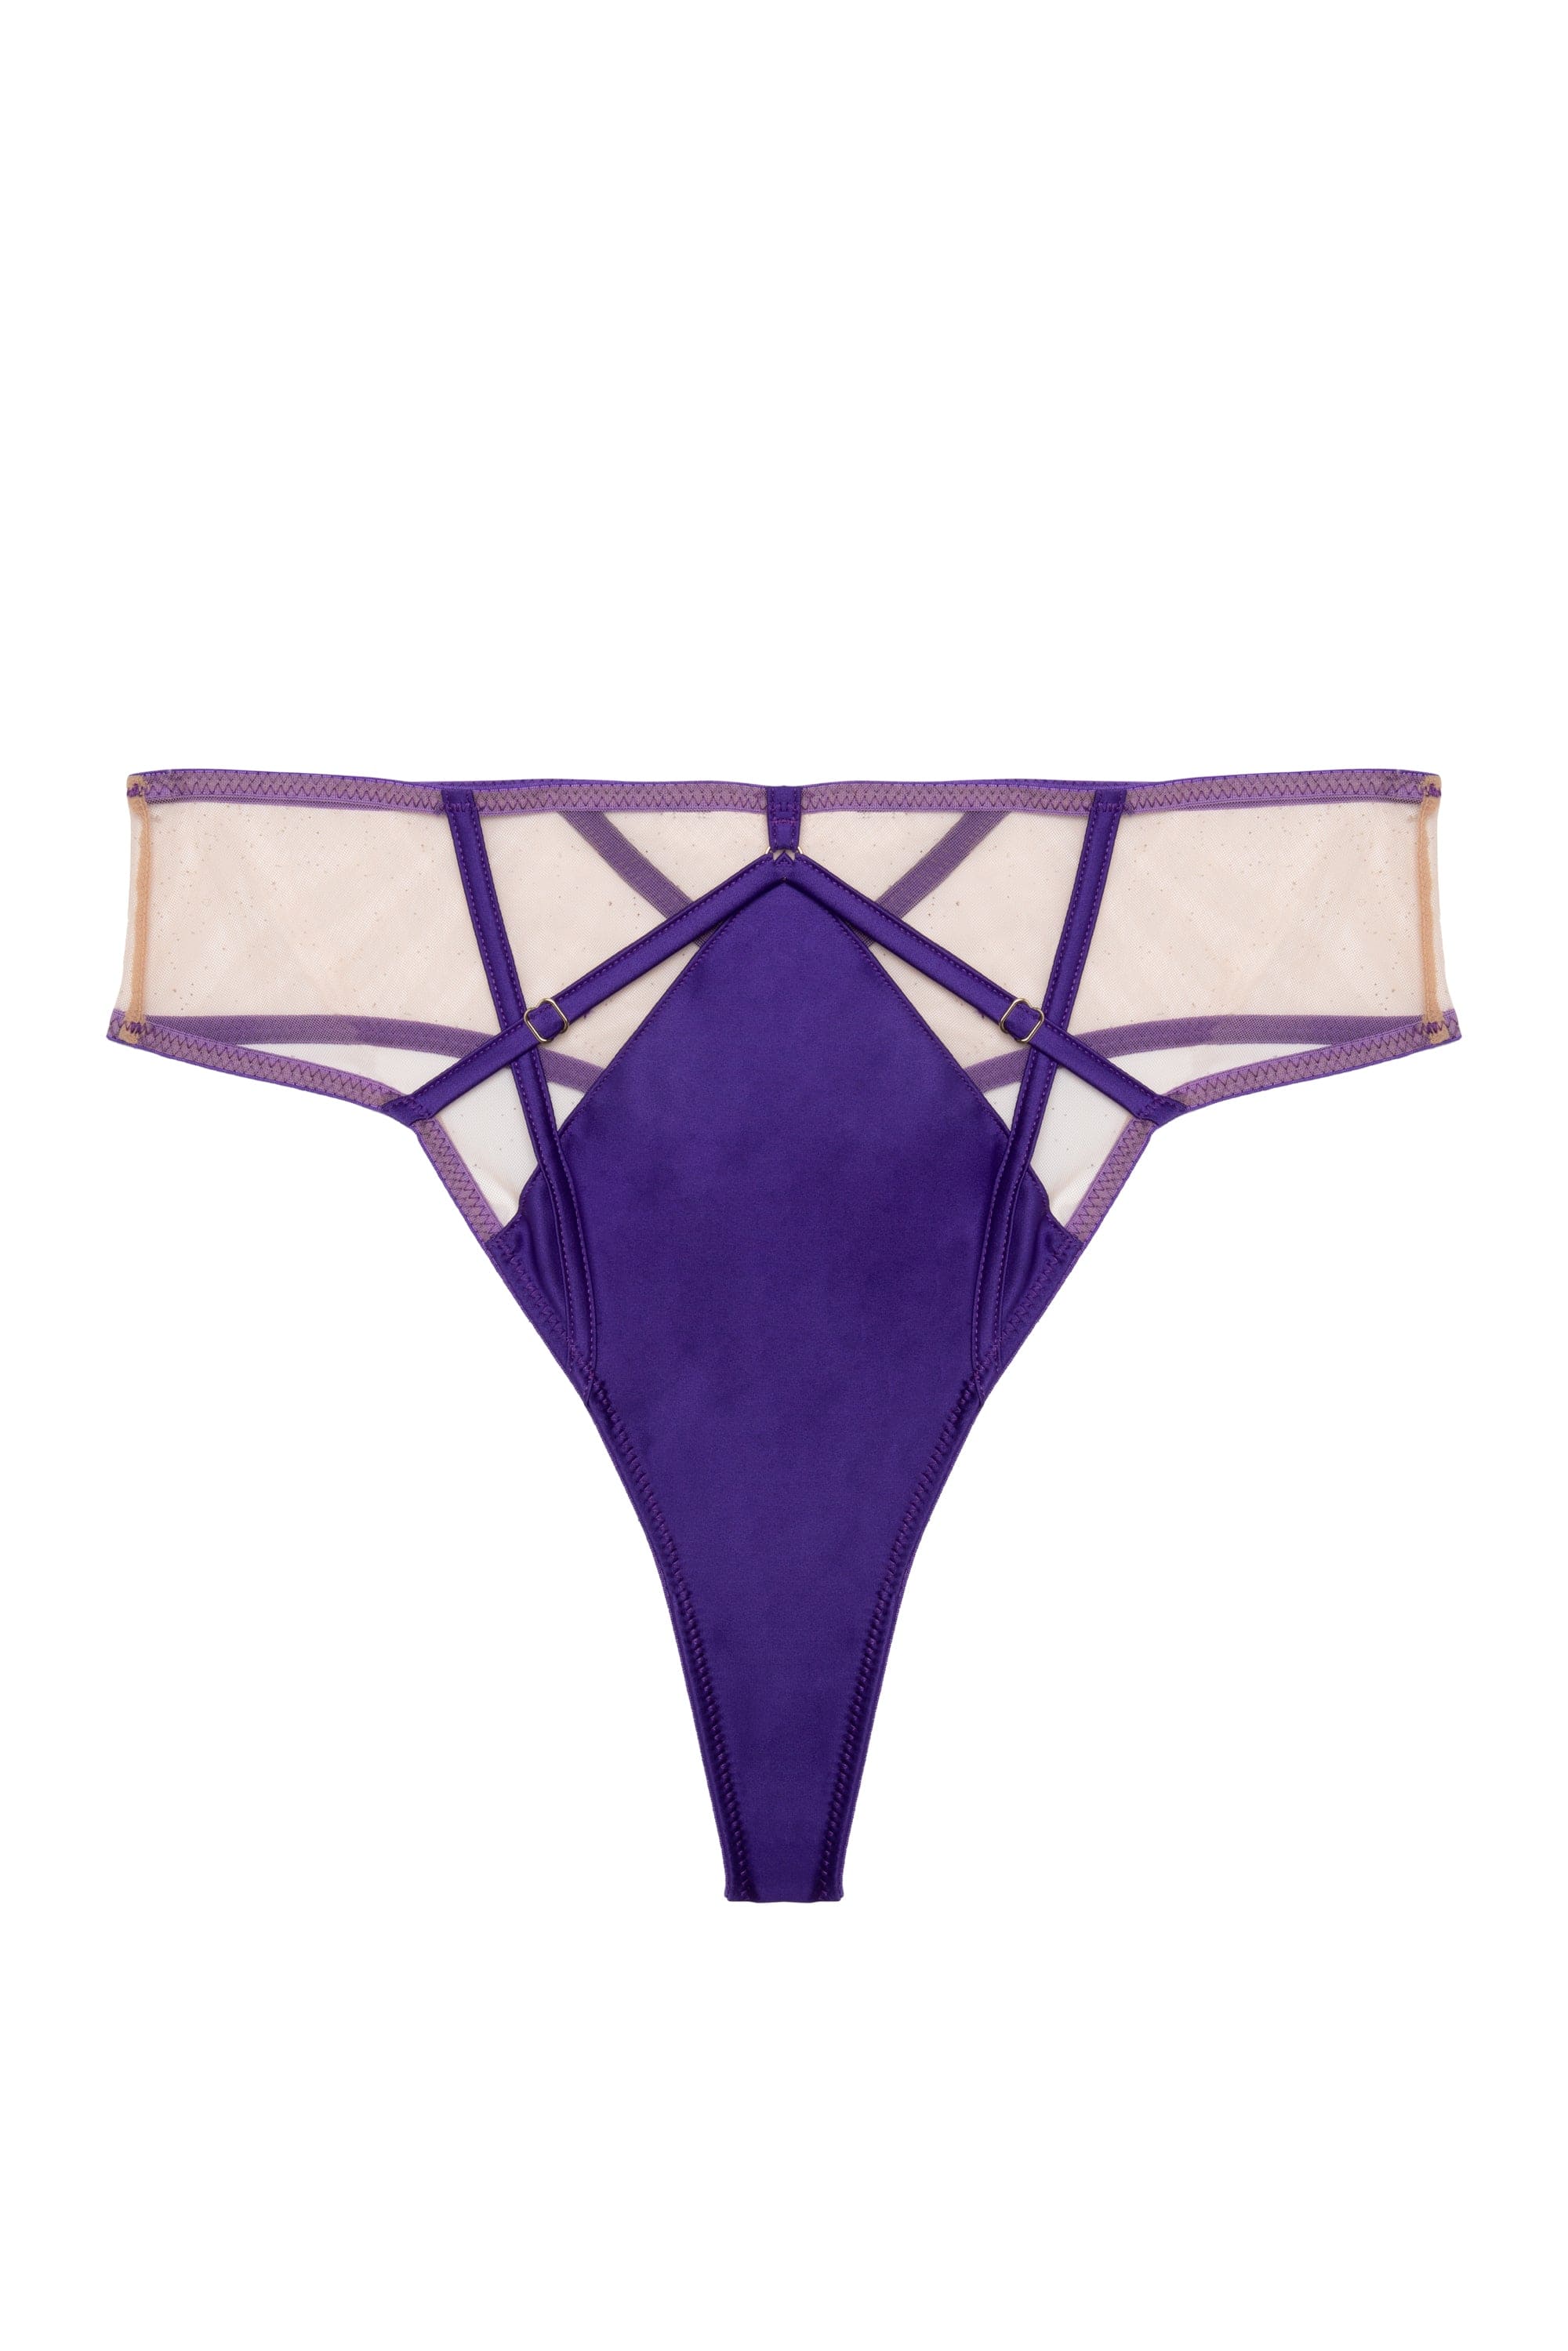 Ramona Purple Strap Detail Illusion Mesh High Waisted Thong